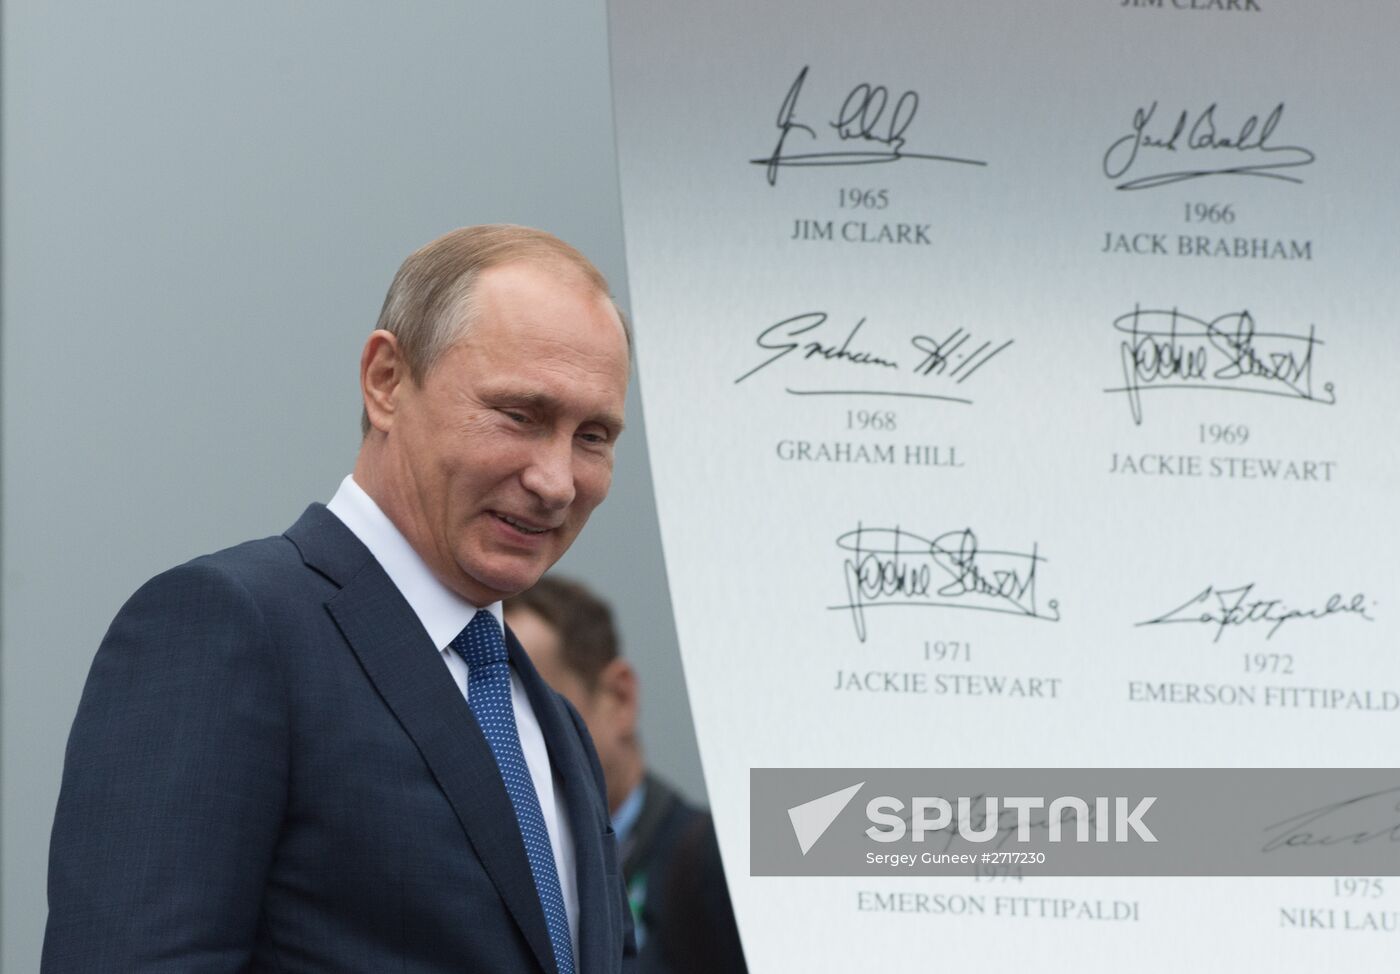 Vladimir Putin attends F1 Russian Grand Prix 2015 in Sochi